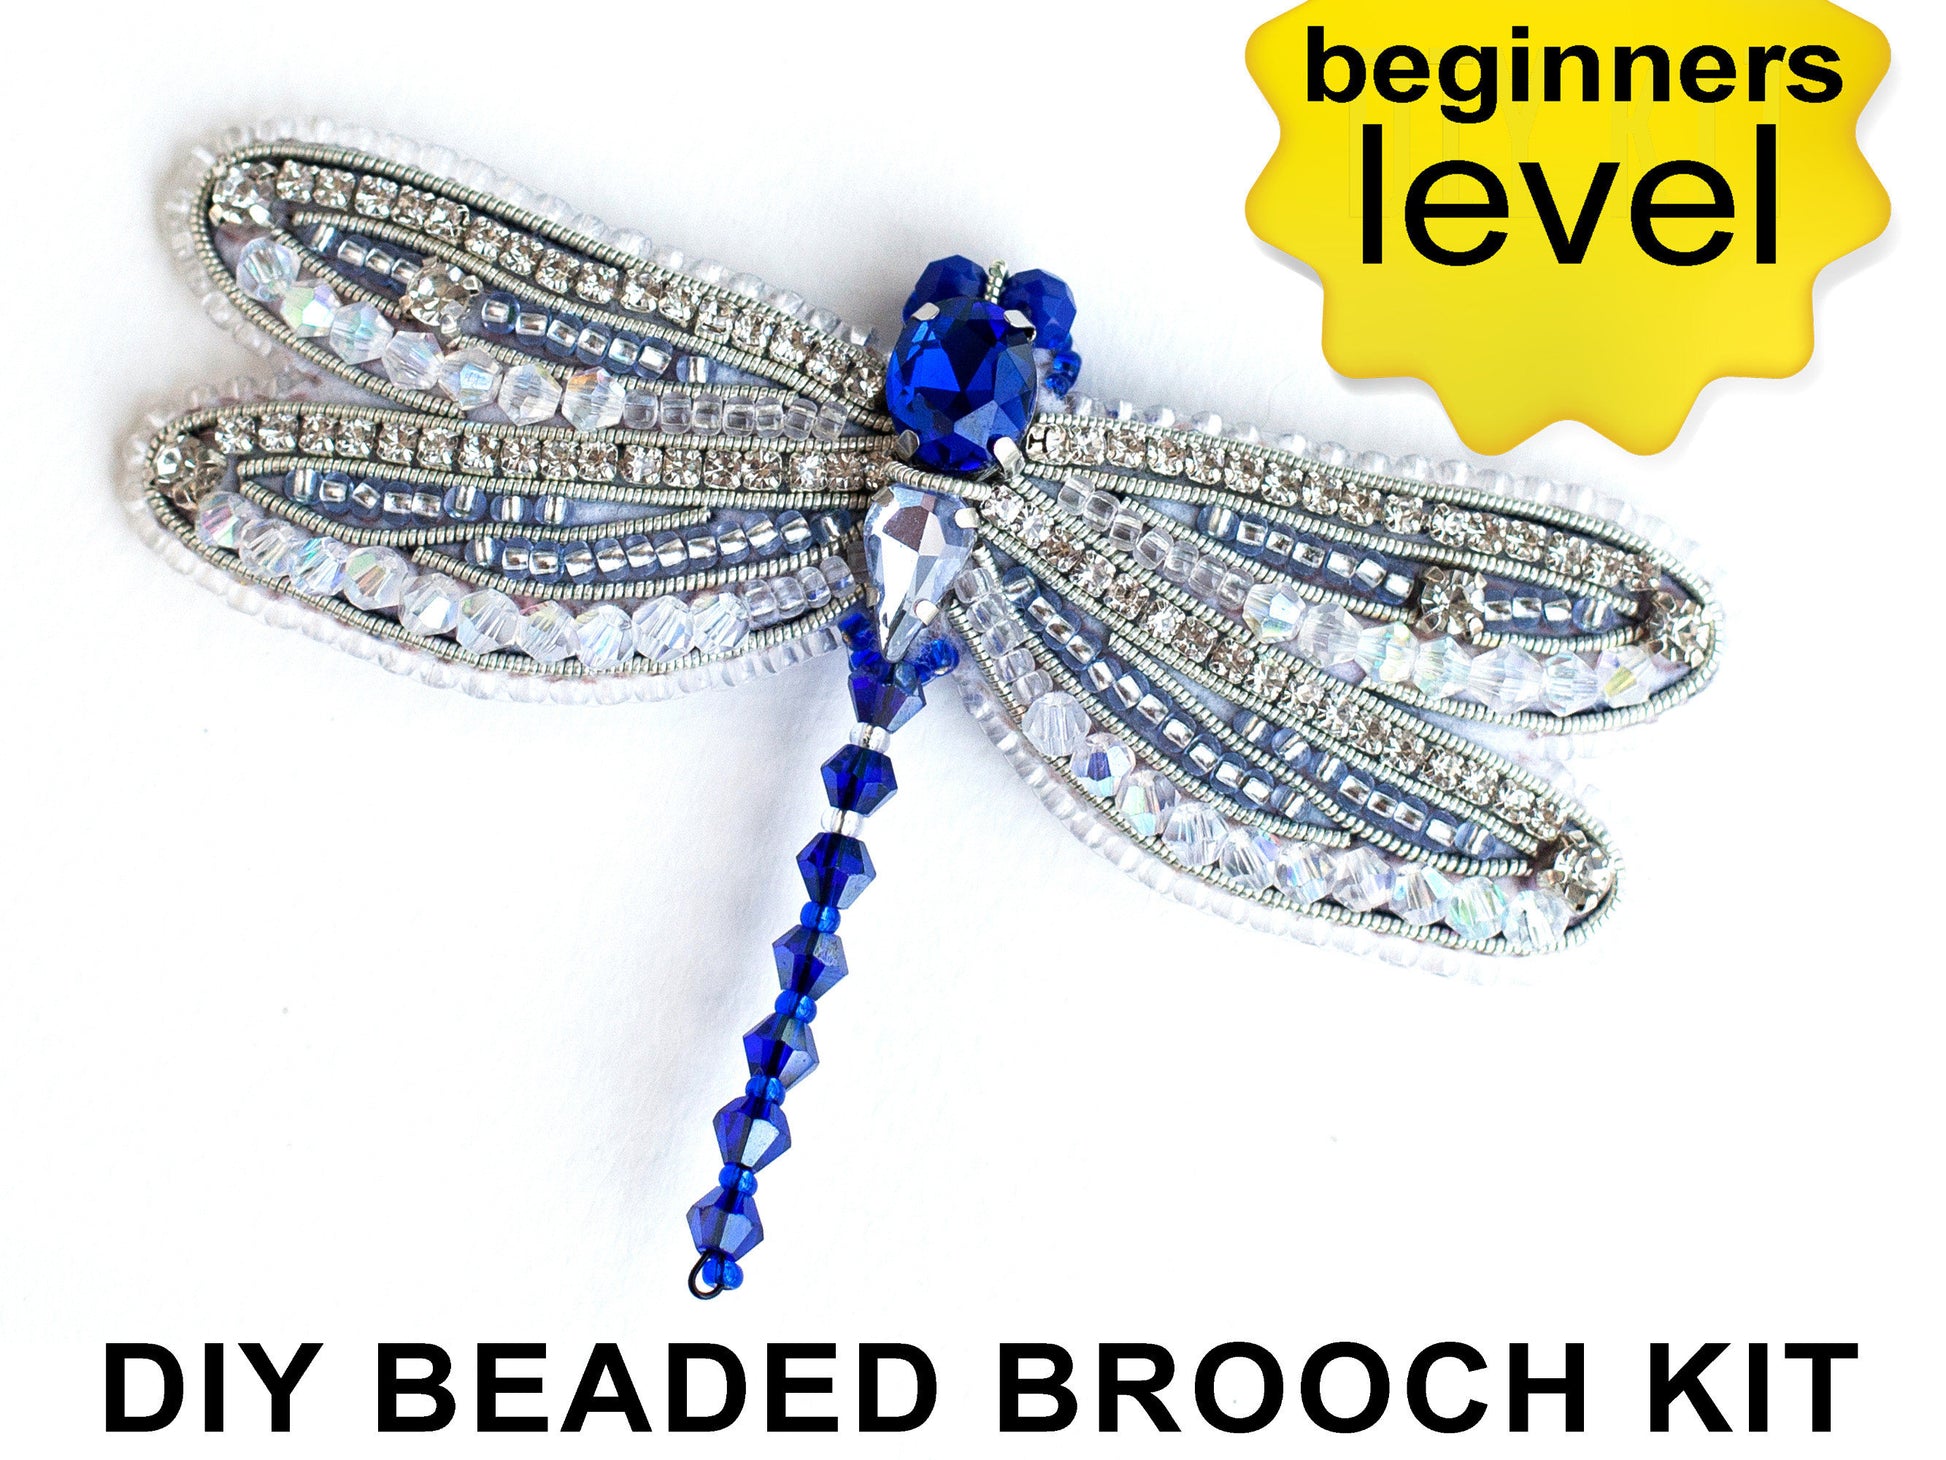 Brooch. Eye Bead Embroidery Kit, code 10-501 Klart